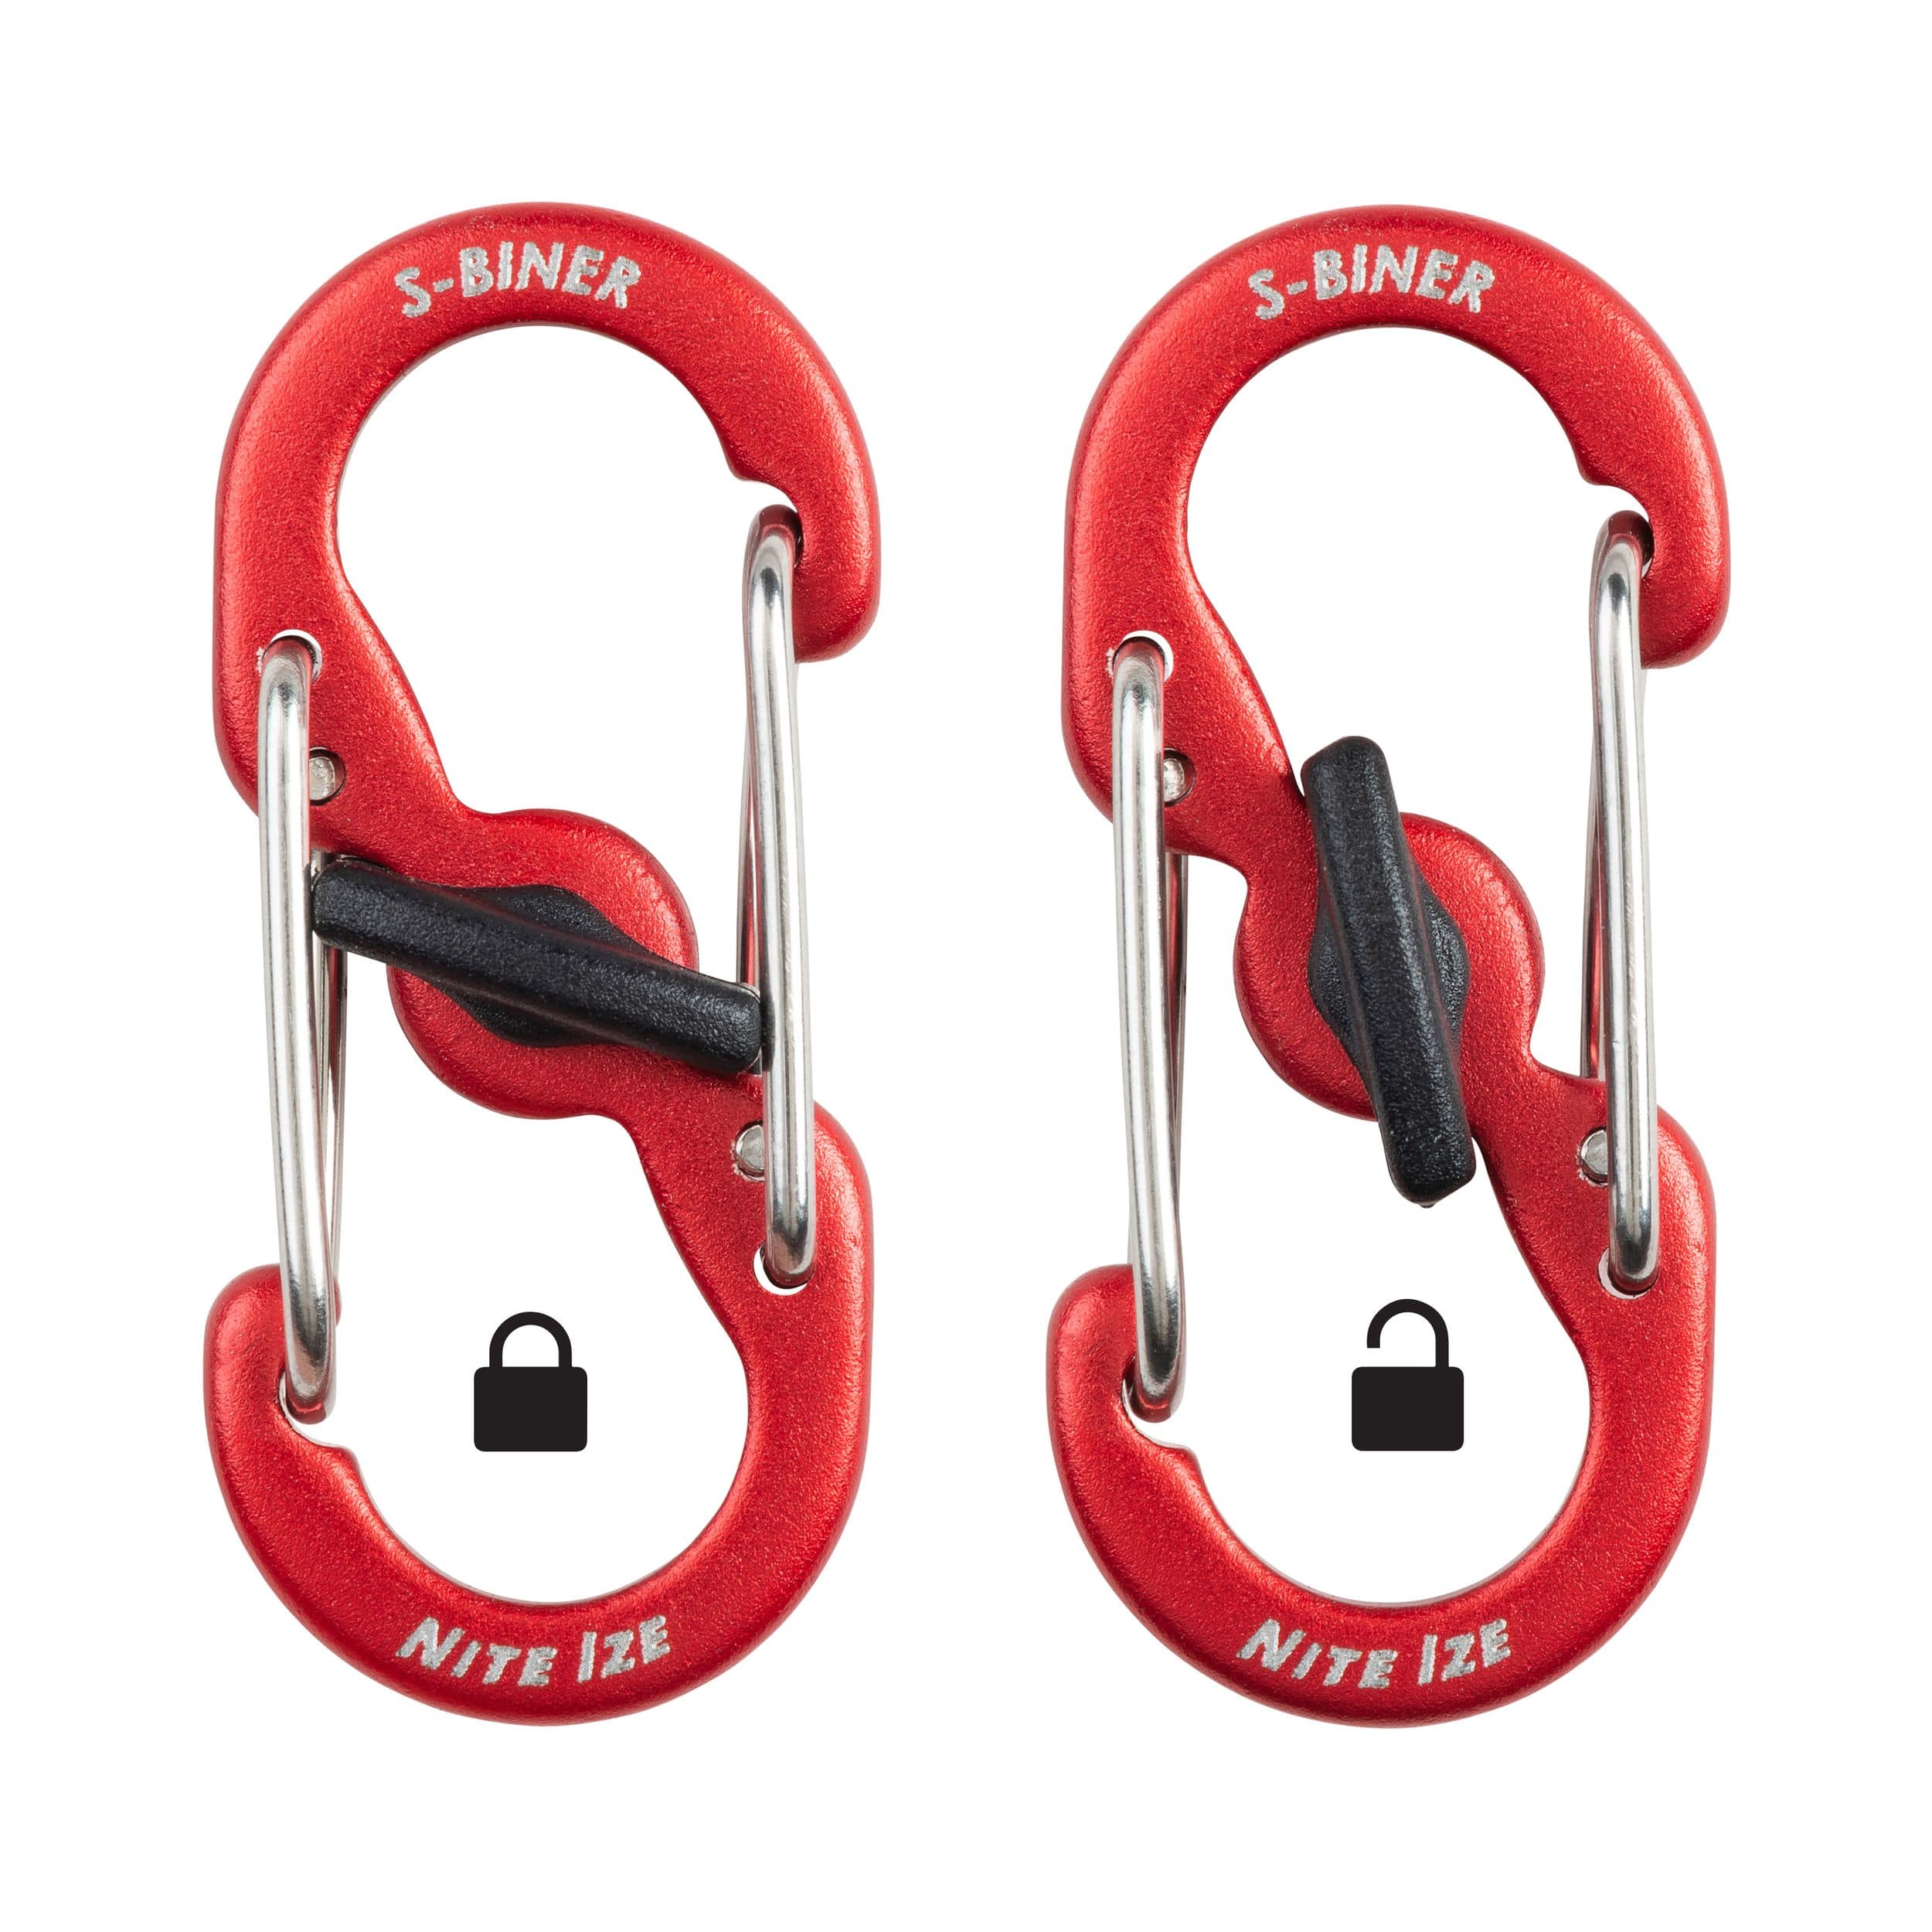 Nite Ize KeyRing Locker S-Biner Identification Keychain w/ 6 Colour